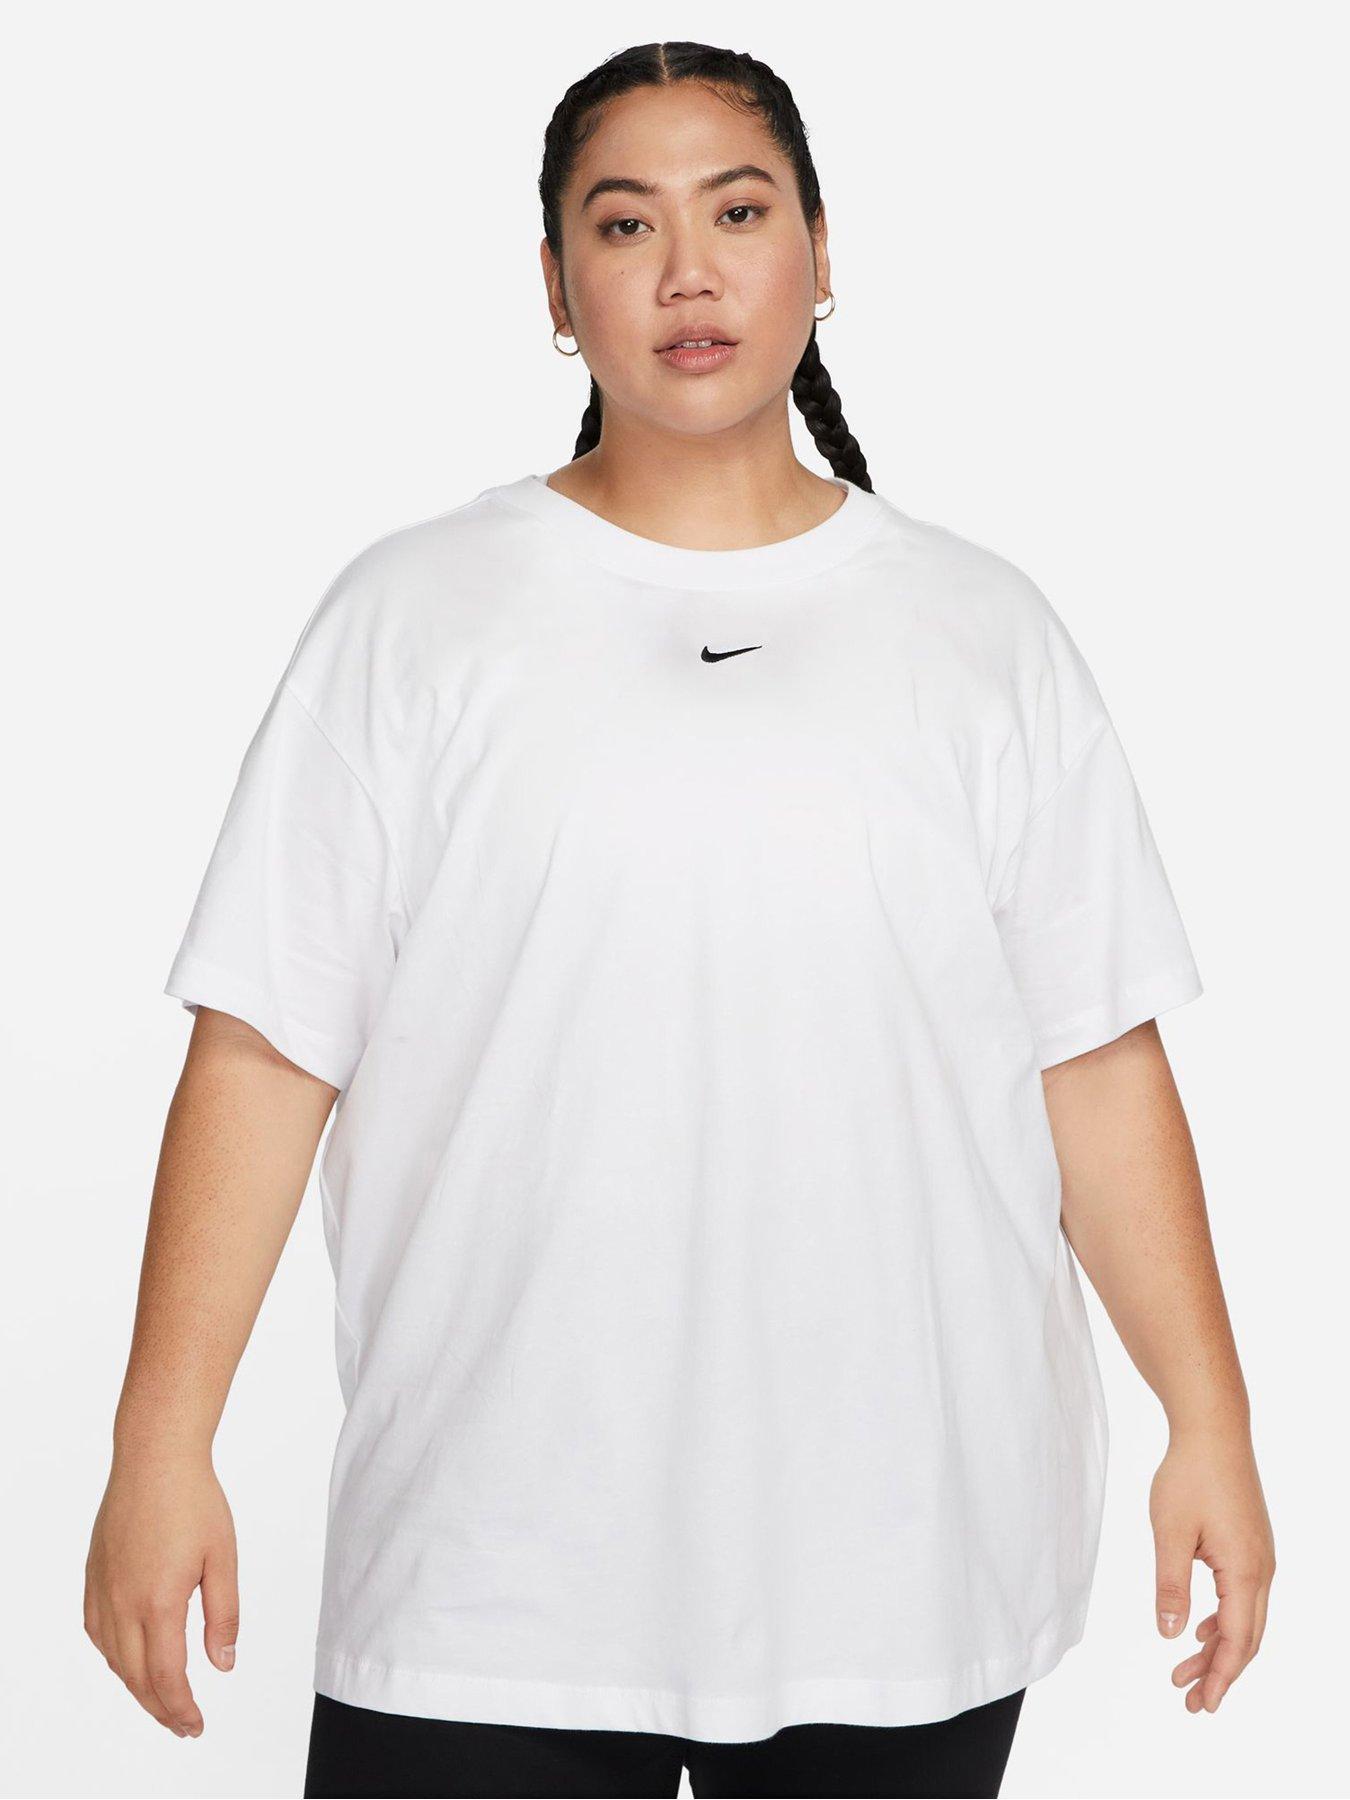 Nike sportswear essentials women's t-shirt, tops and shirts, Leisure